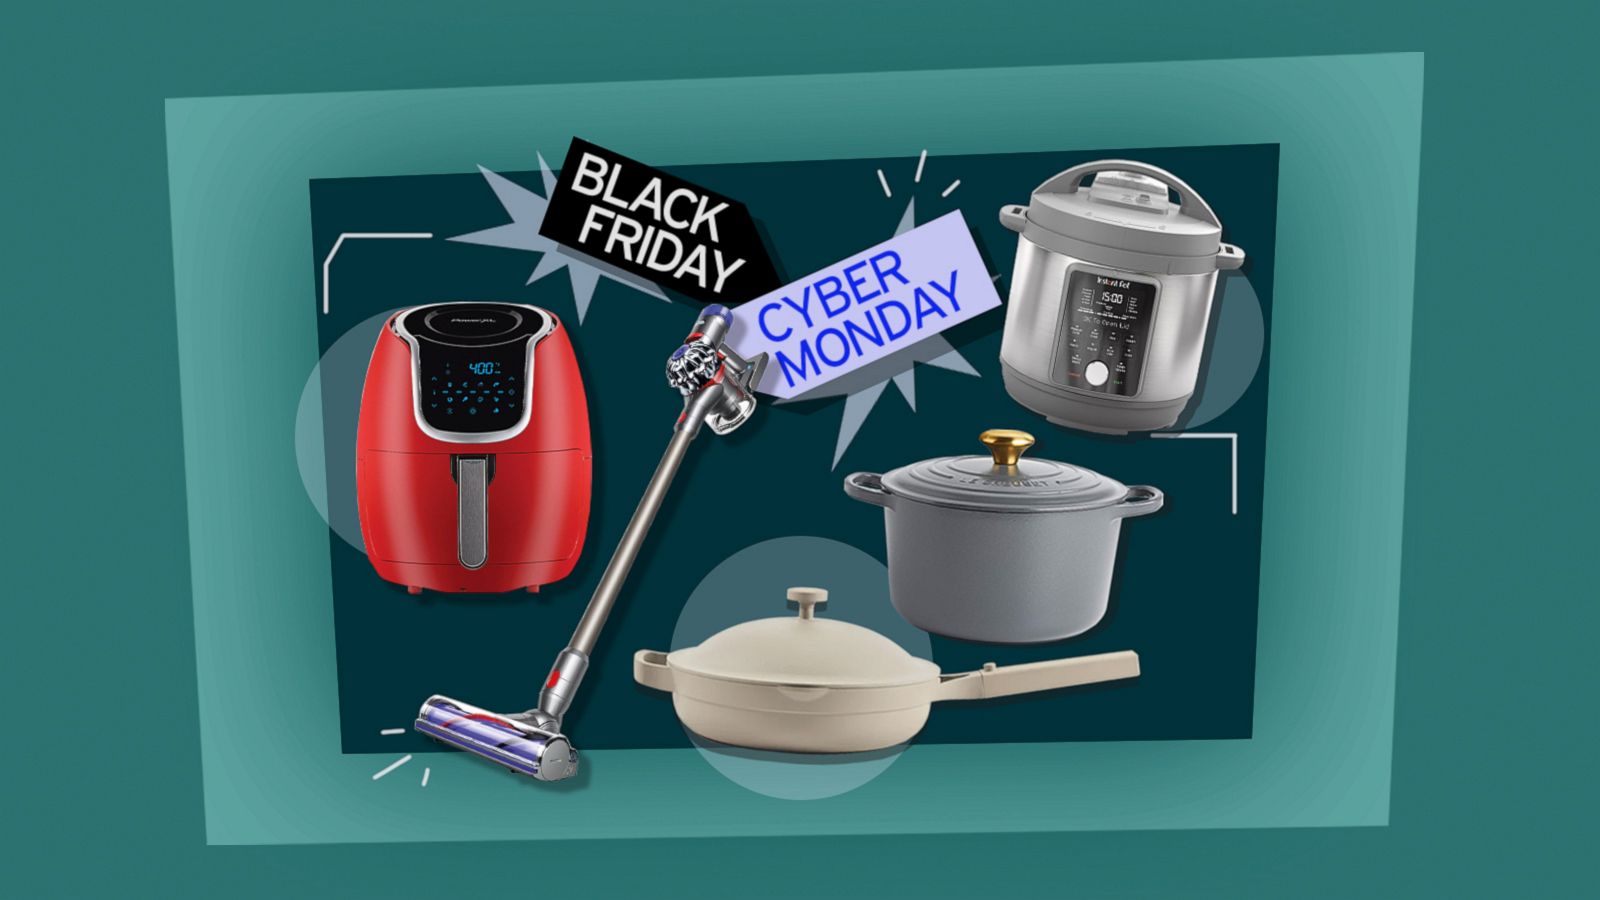 The Best  Cyber Monday Deals on Instant Pot Kitchen